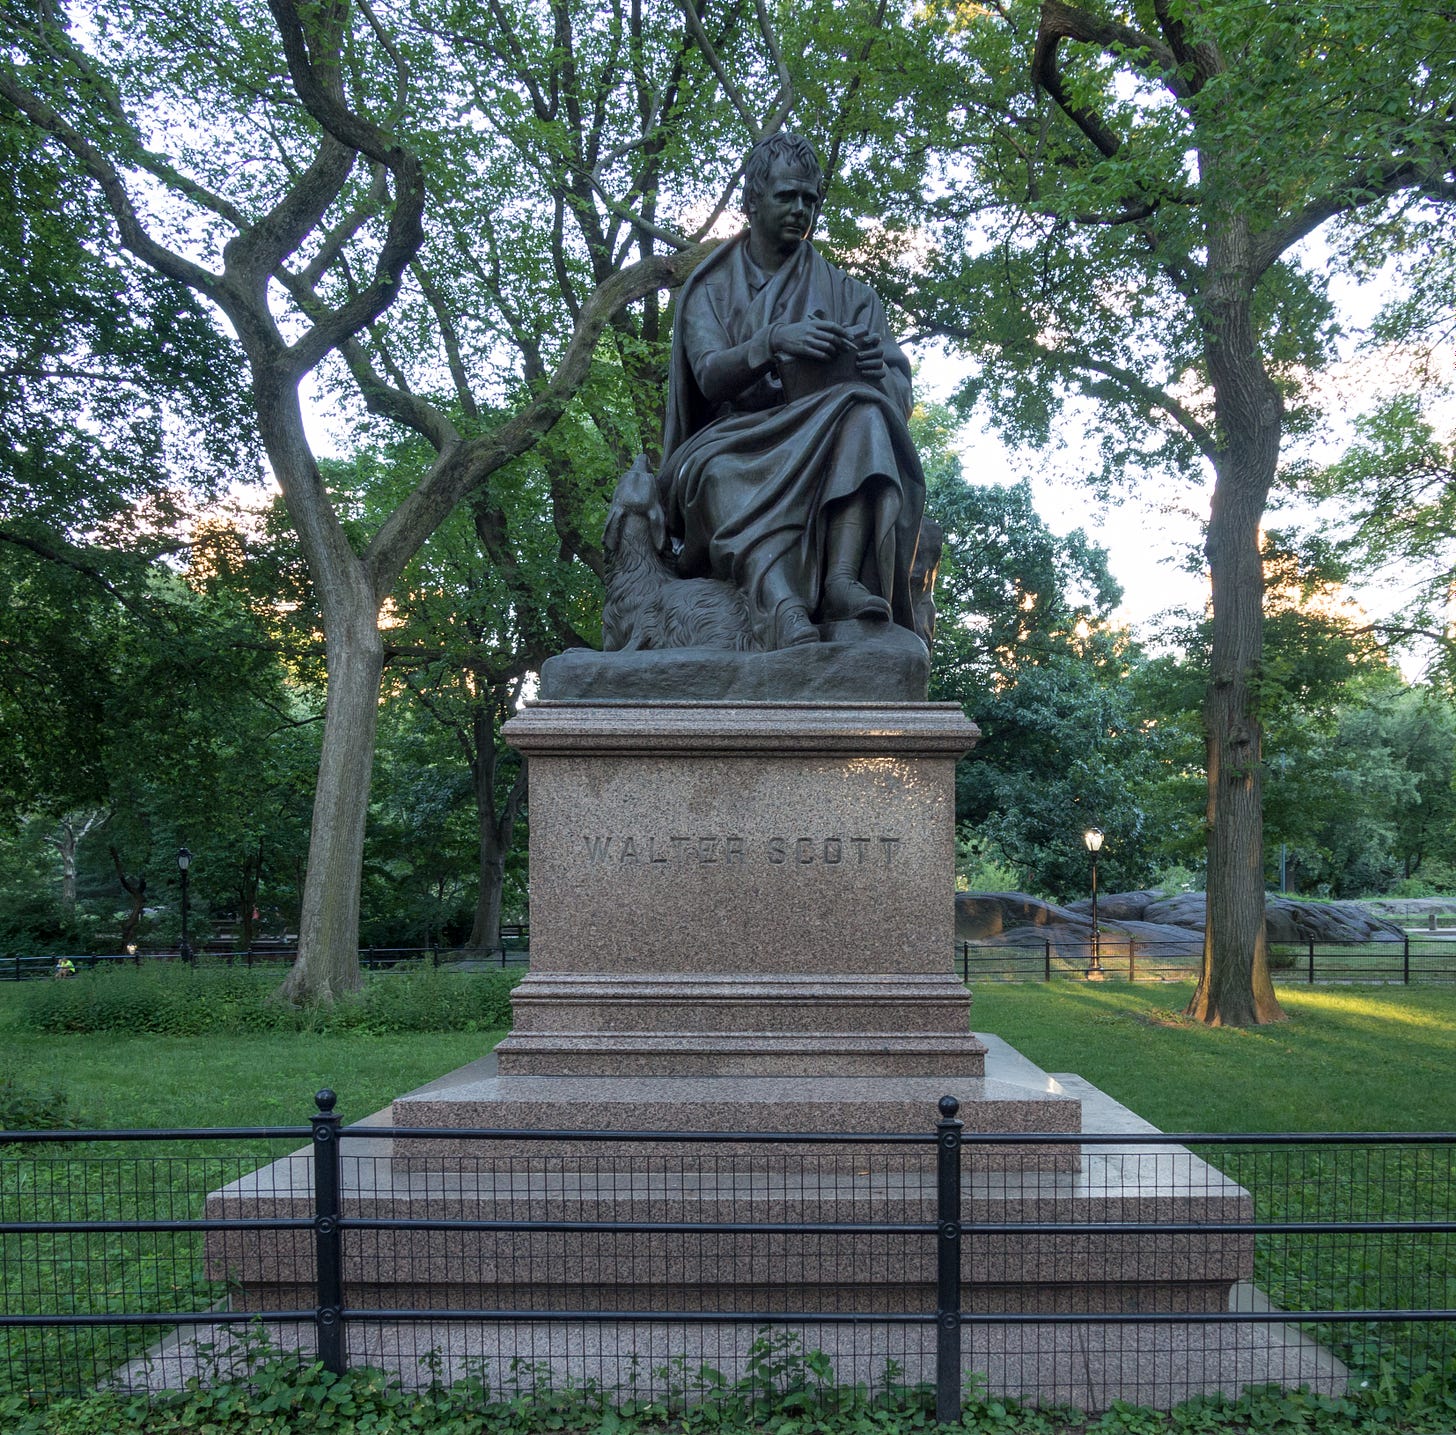 File:Walter Scott statue in Central Park.jpg - Wikimedia Commons